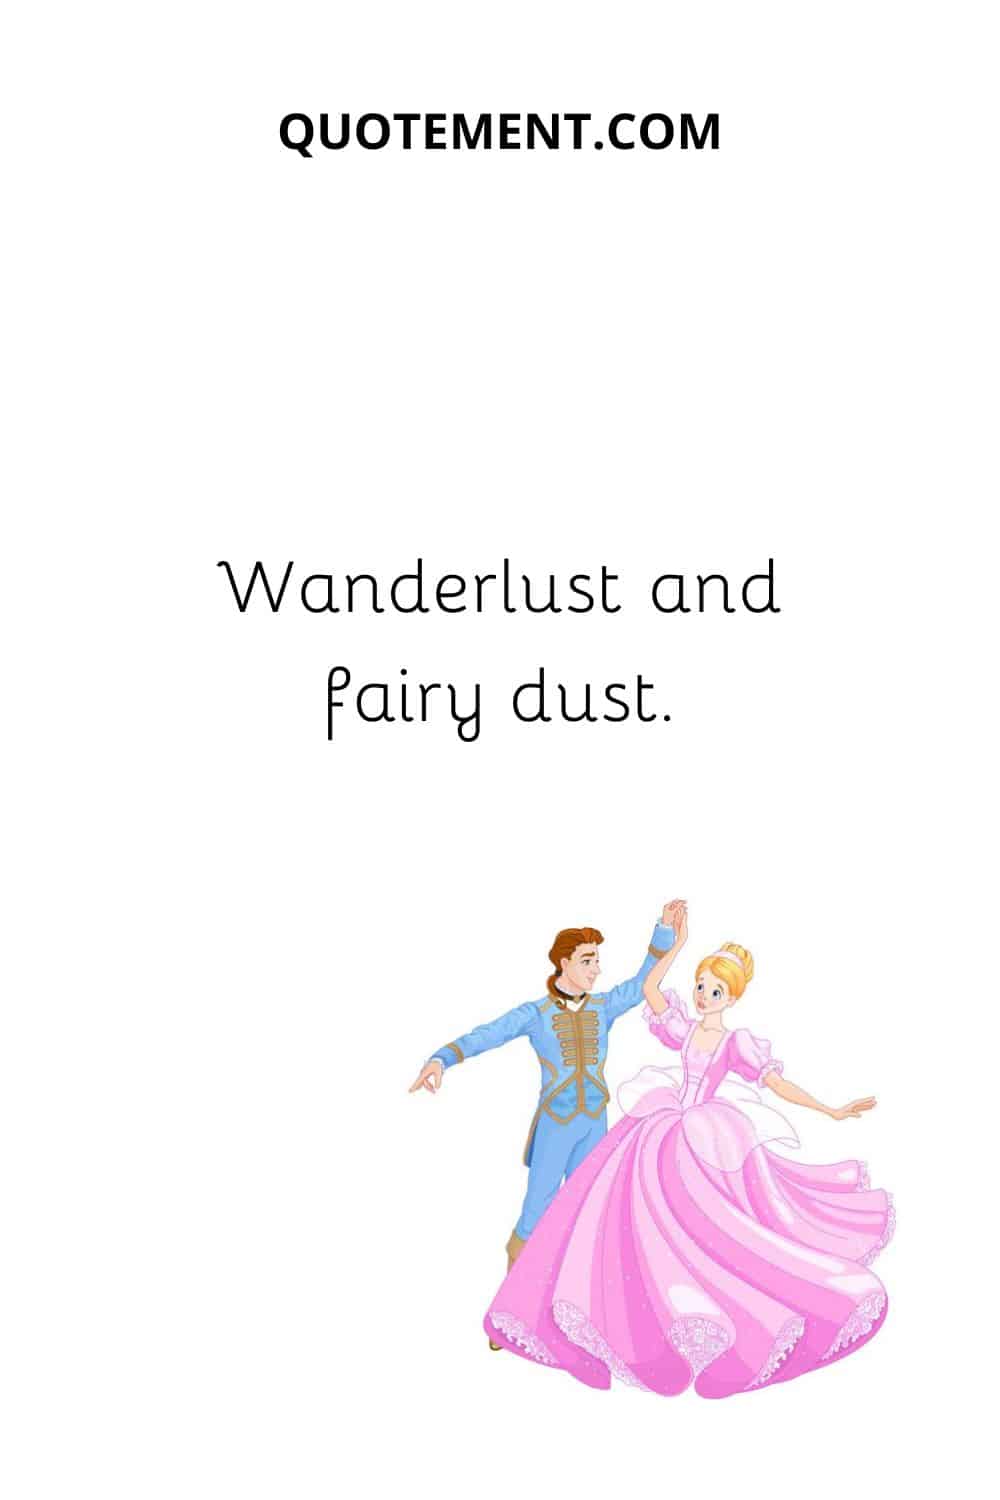 Wanderlust and fairy dust